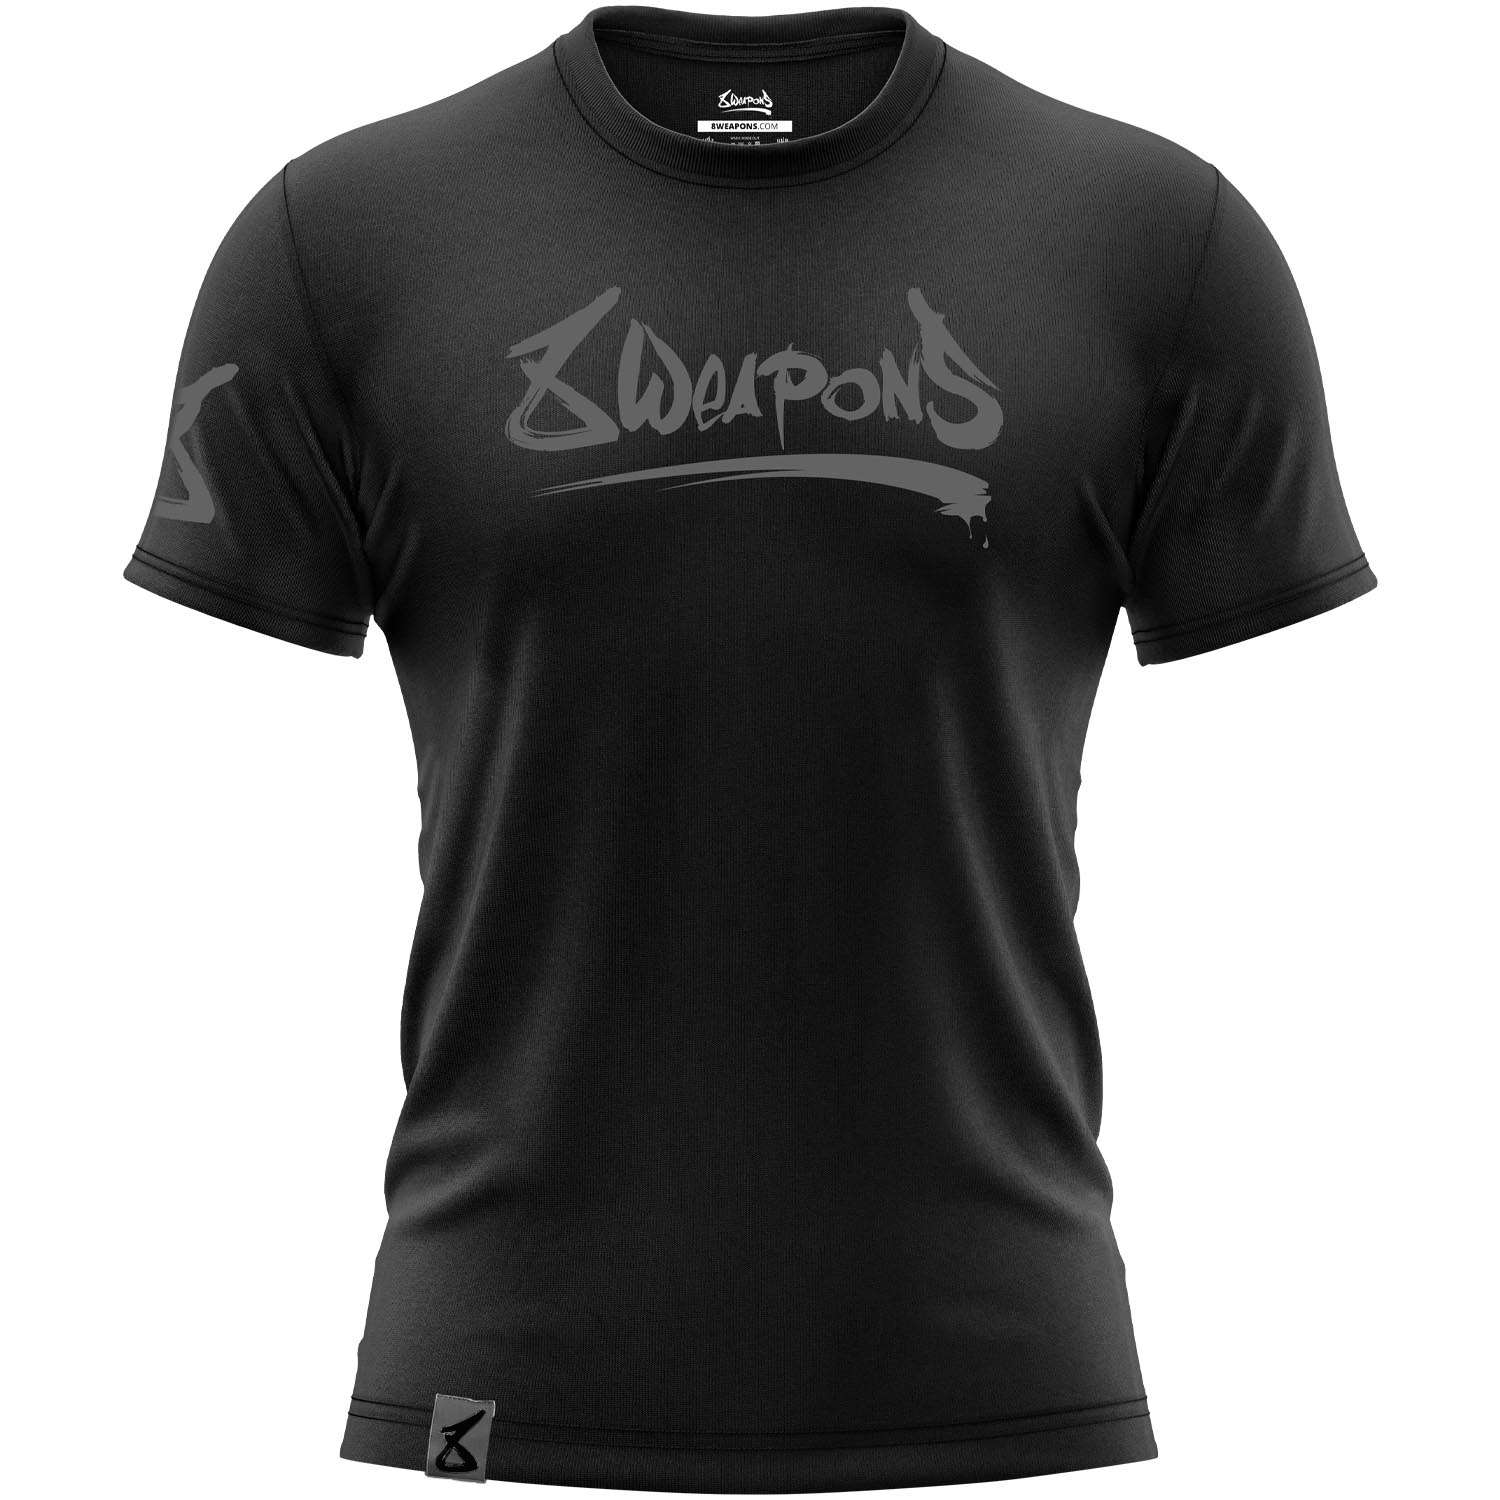 8 WEAPONS T-Shirt, Unlimited 2.0, black-black, S